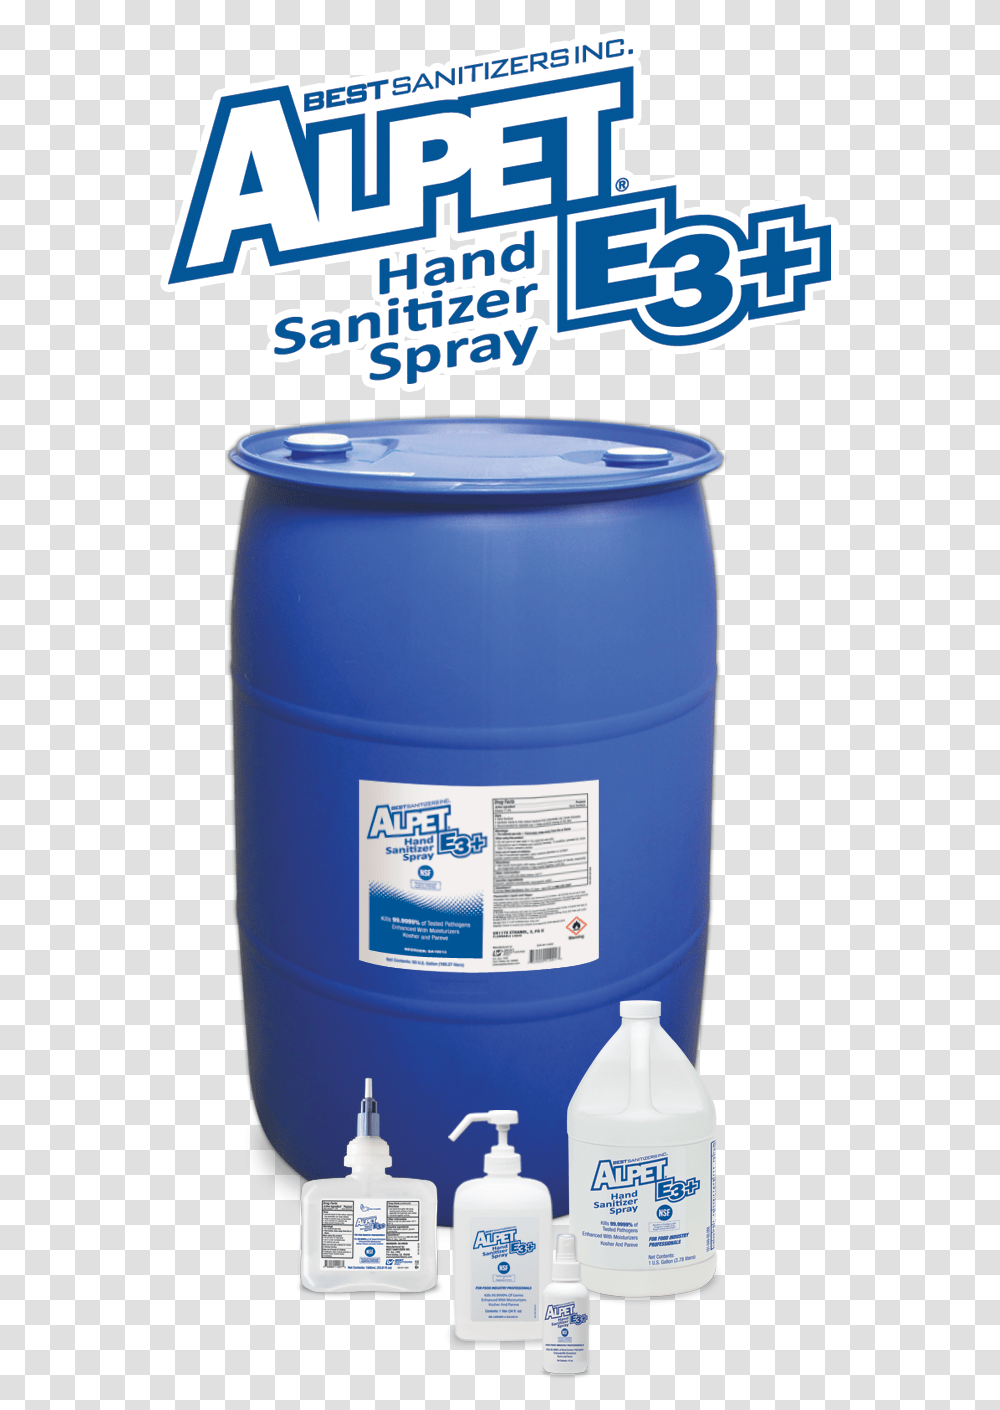 Best Sanitizers Alpet E3 Plus Hand Sanitizer Spray Plastic Bottle, Barrel, Shaker, Milk, Beverage Transparent Png